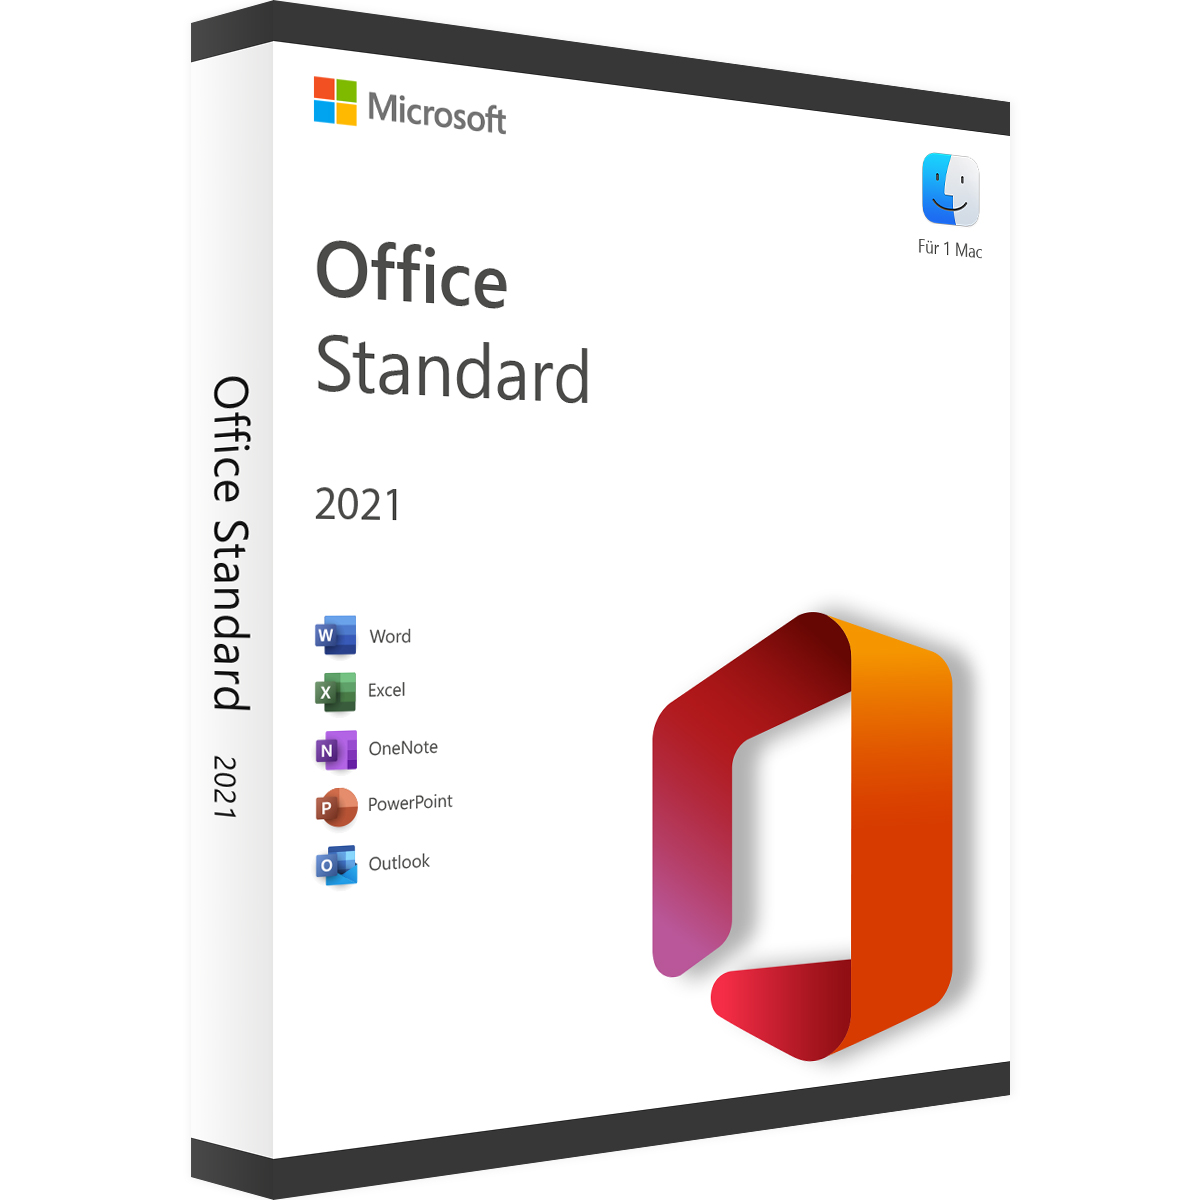 Office 2021 Standard for Mac